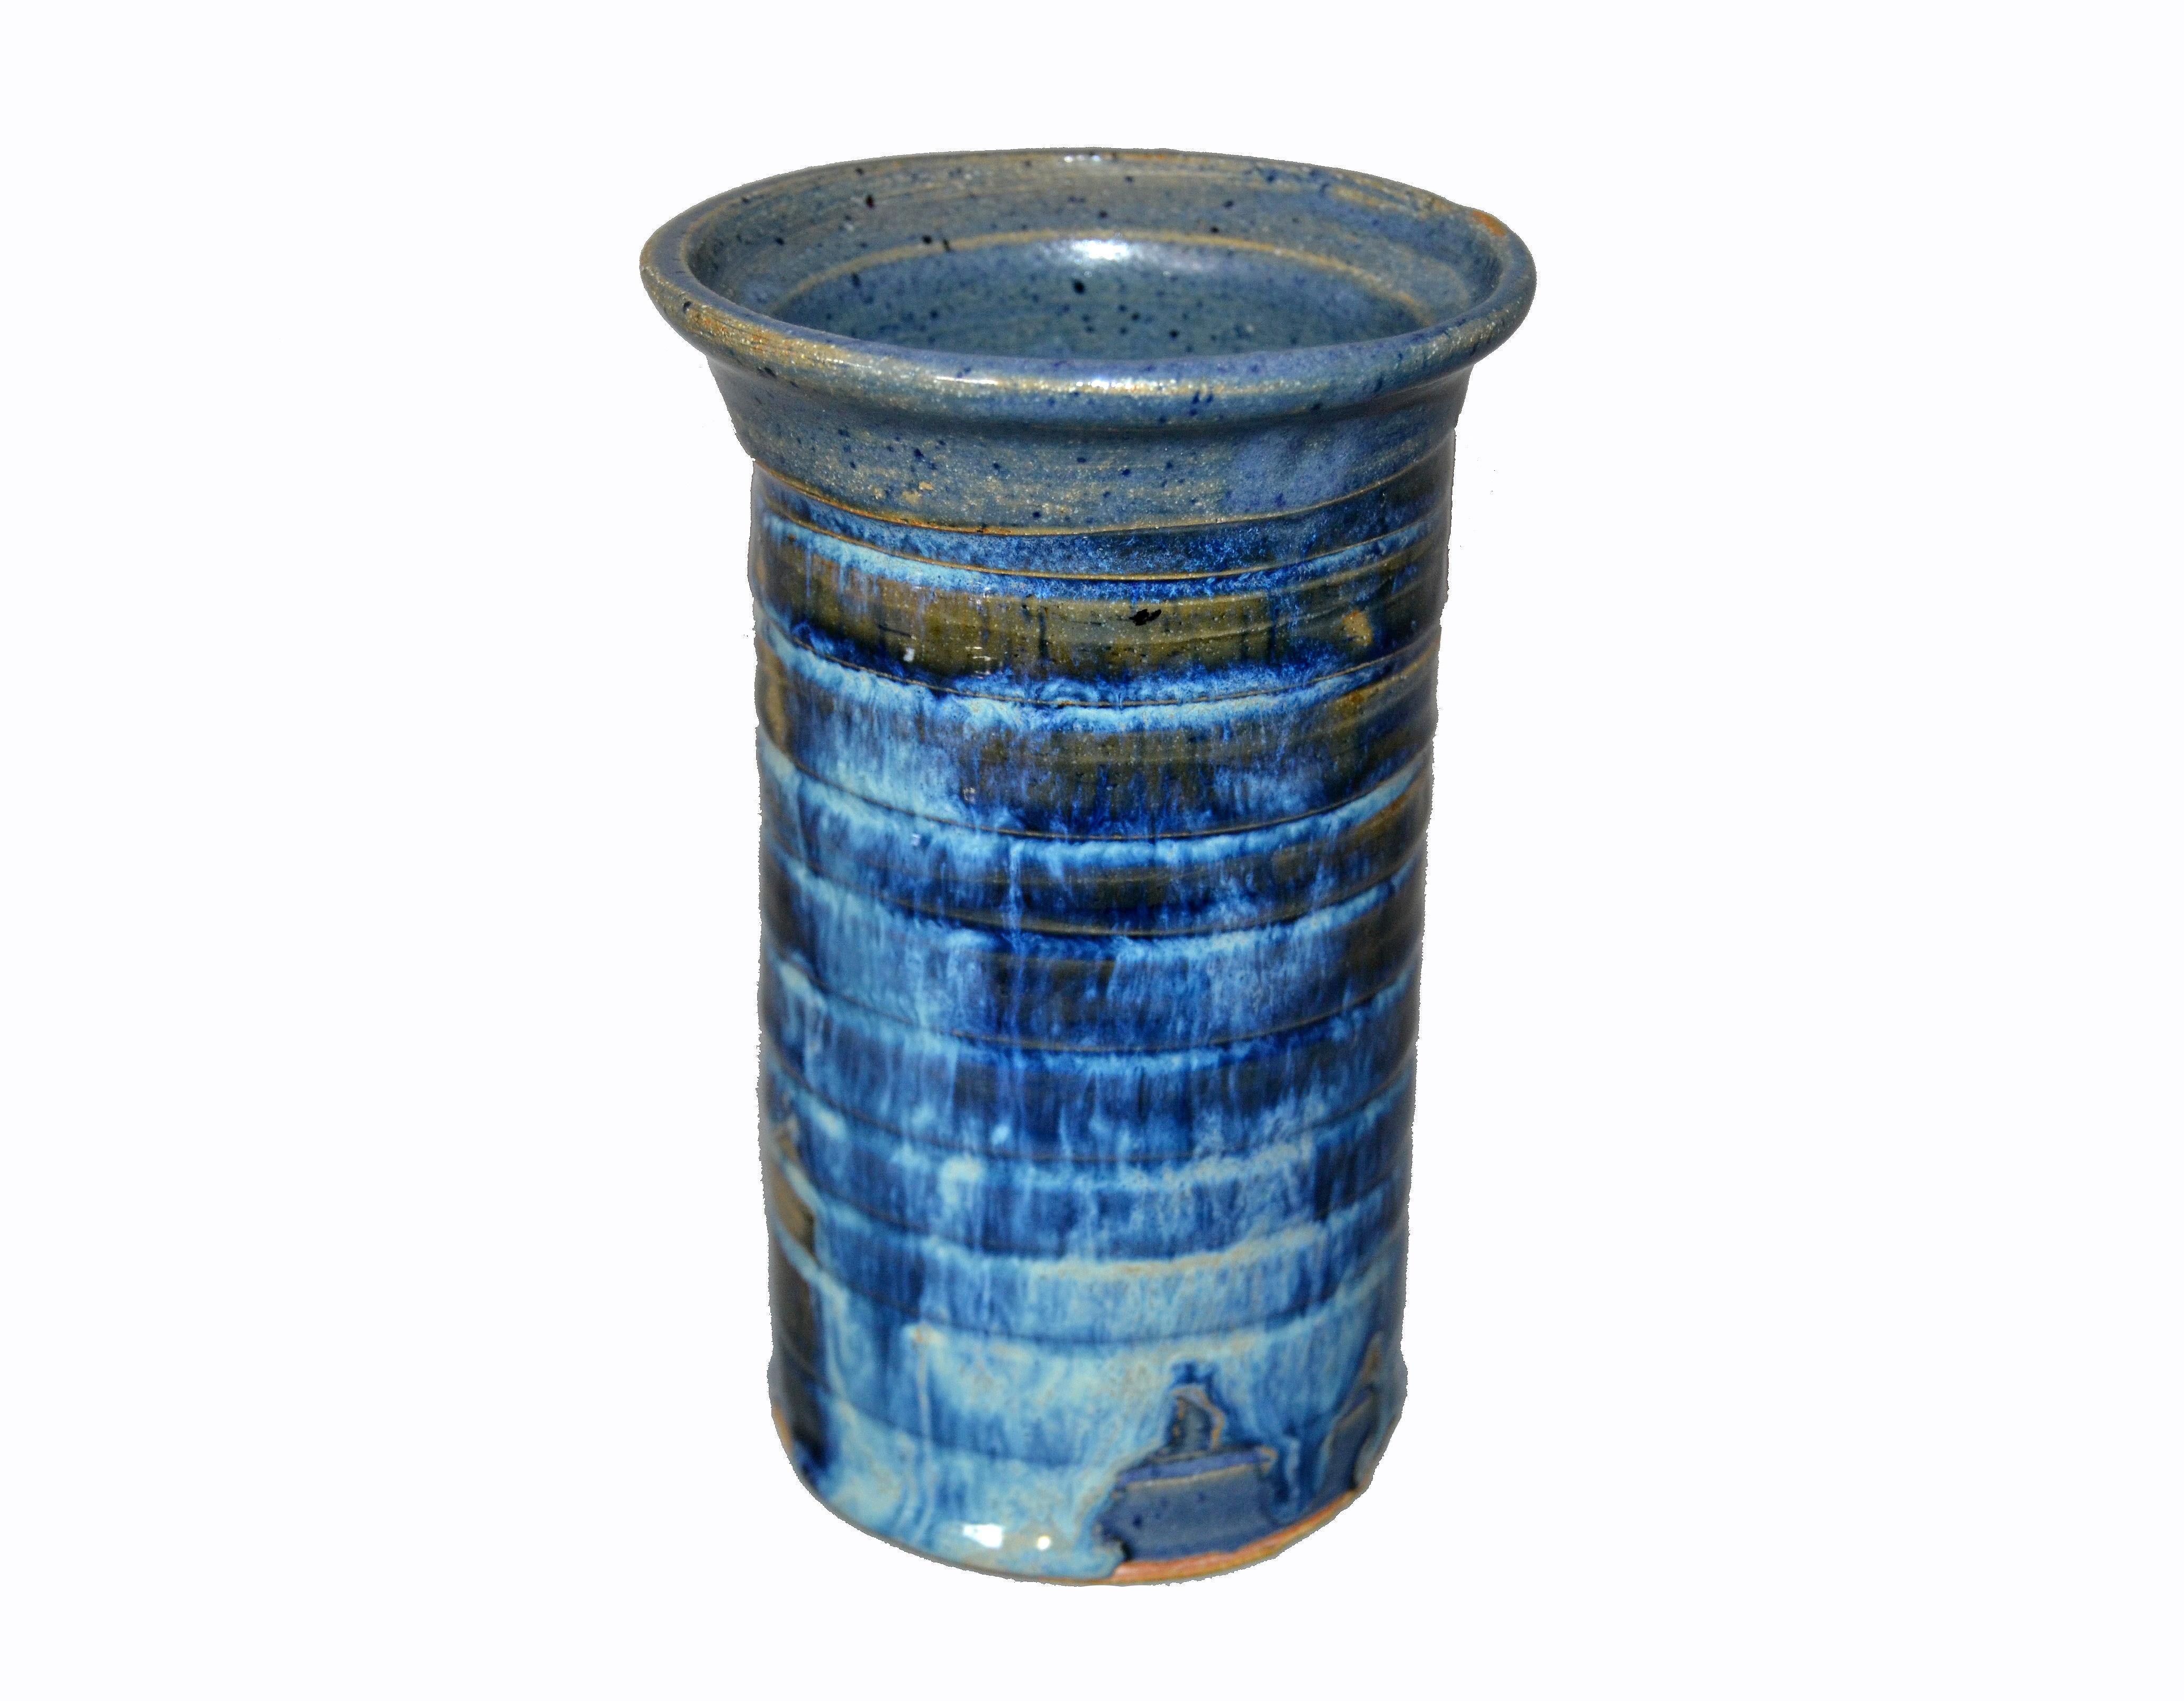 Vintage Scandinavian Modern handcrafted glazed blue and brown art pottery, ceramic decorative vase.
Unidentified Scandinavian ceramist: M, numbered 07 A.
 